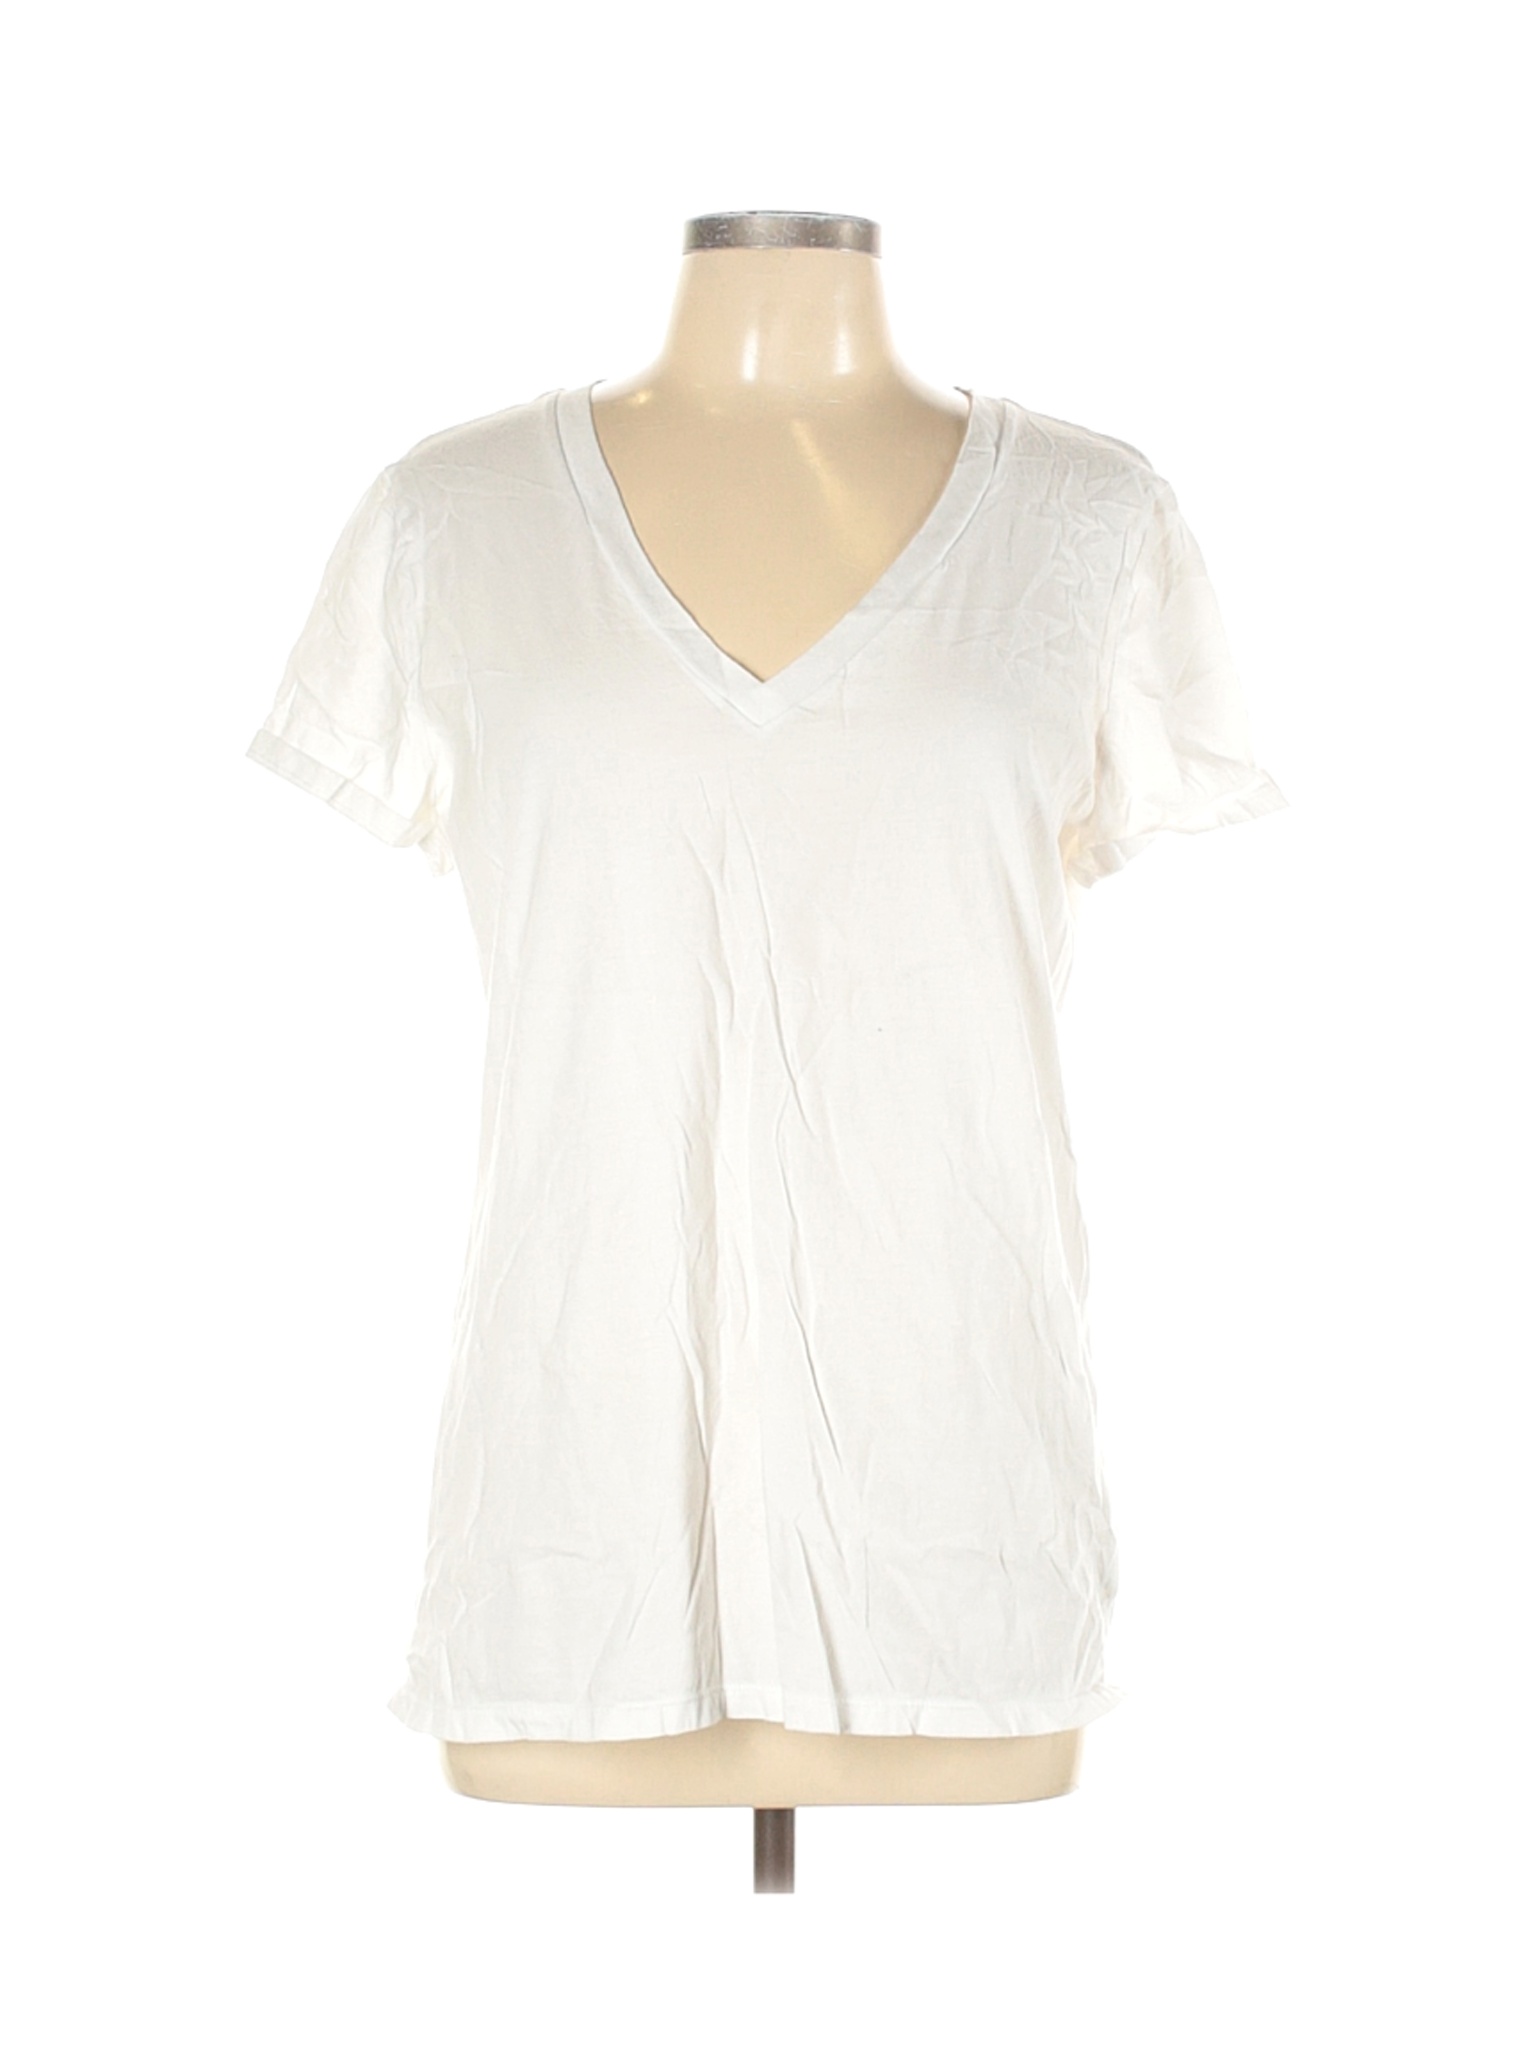 Gap Women White Short Sleeve T-Shirt L Tall | eBay